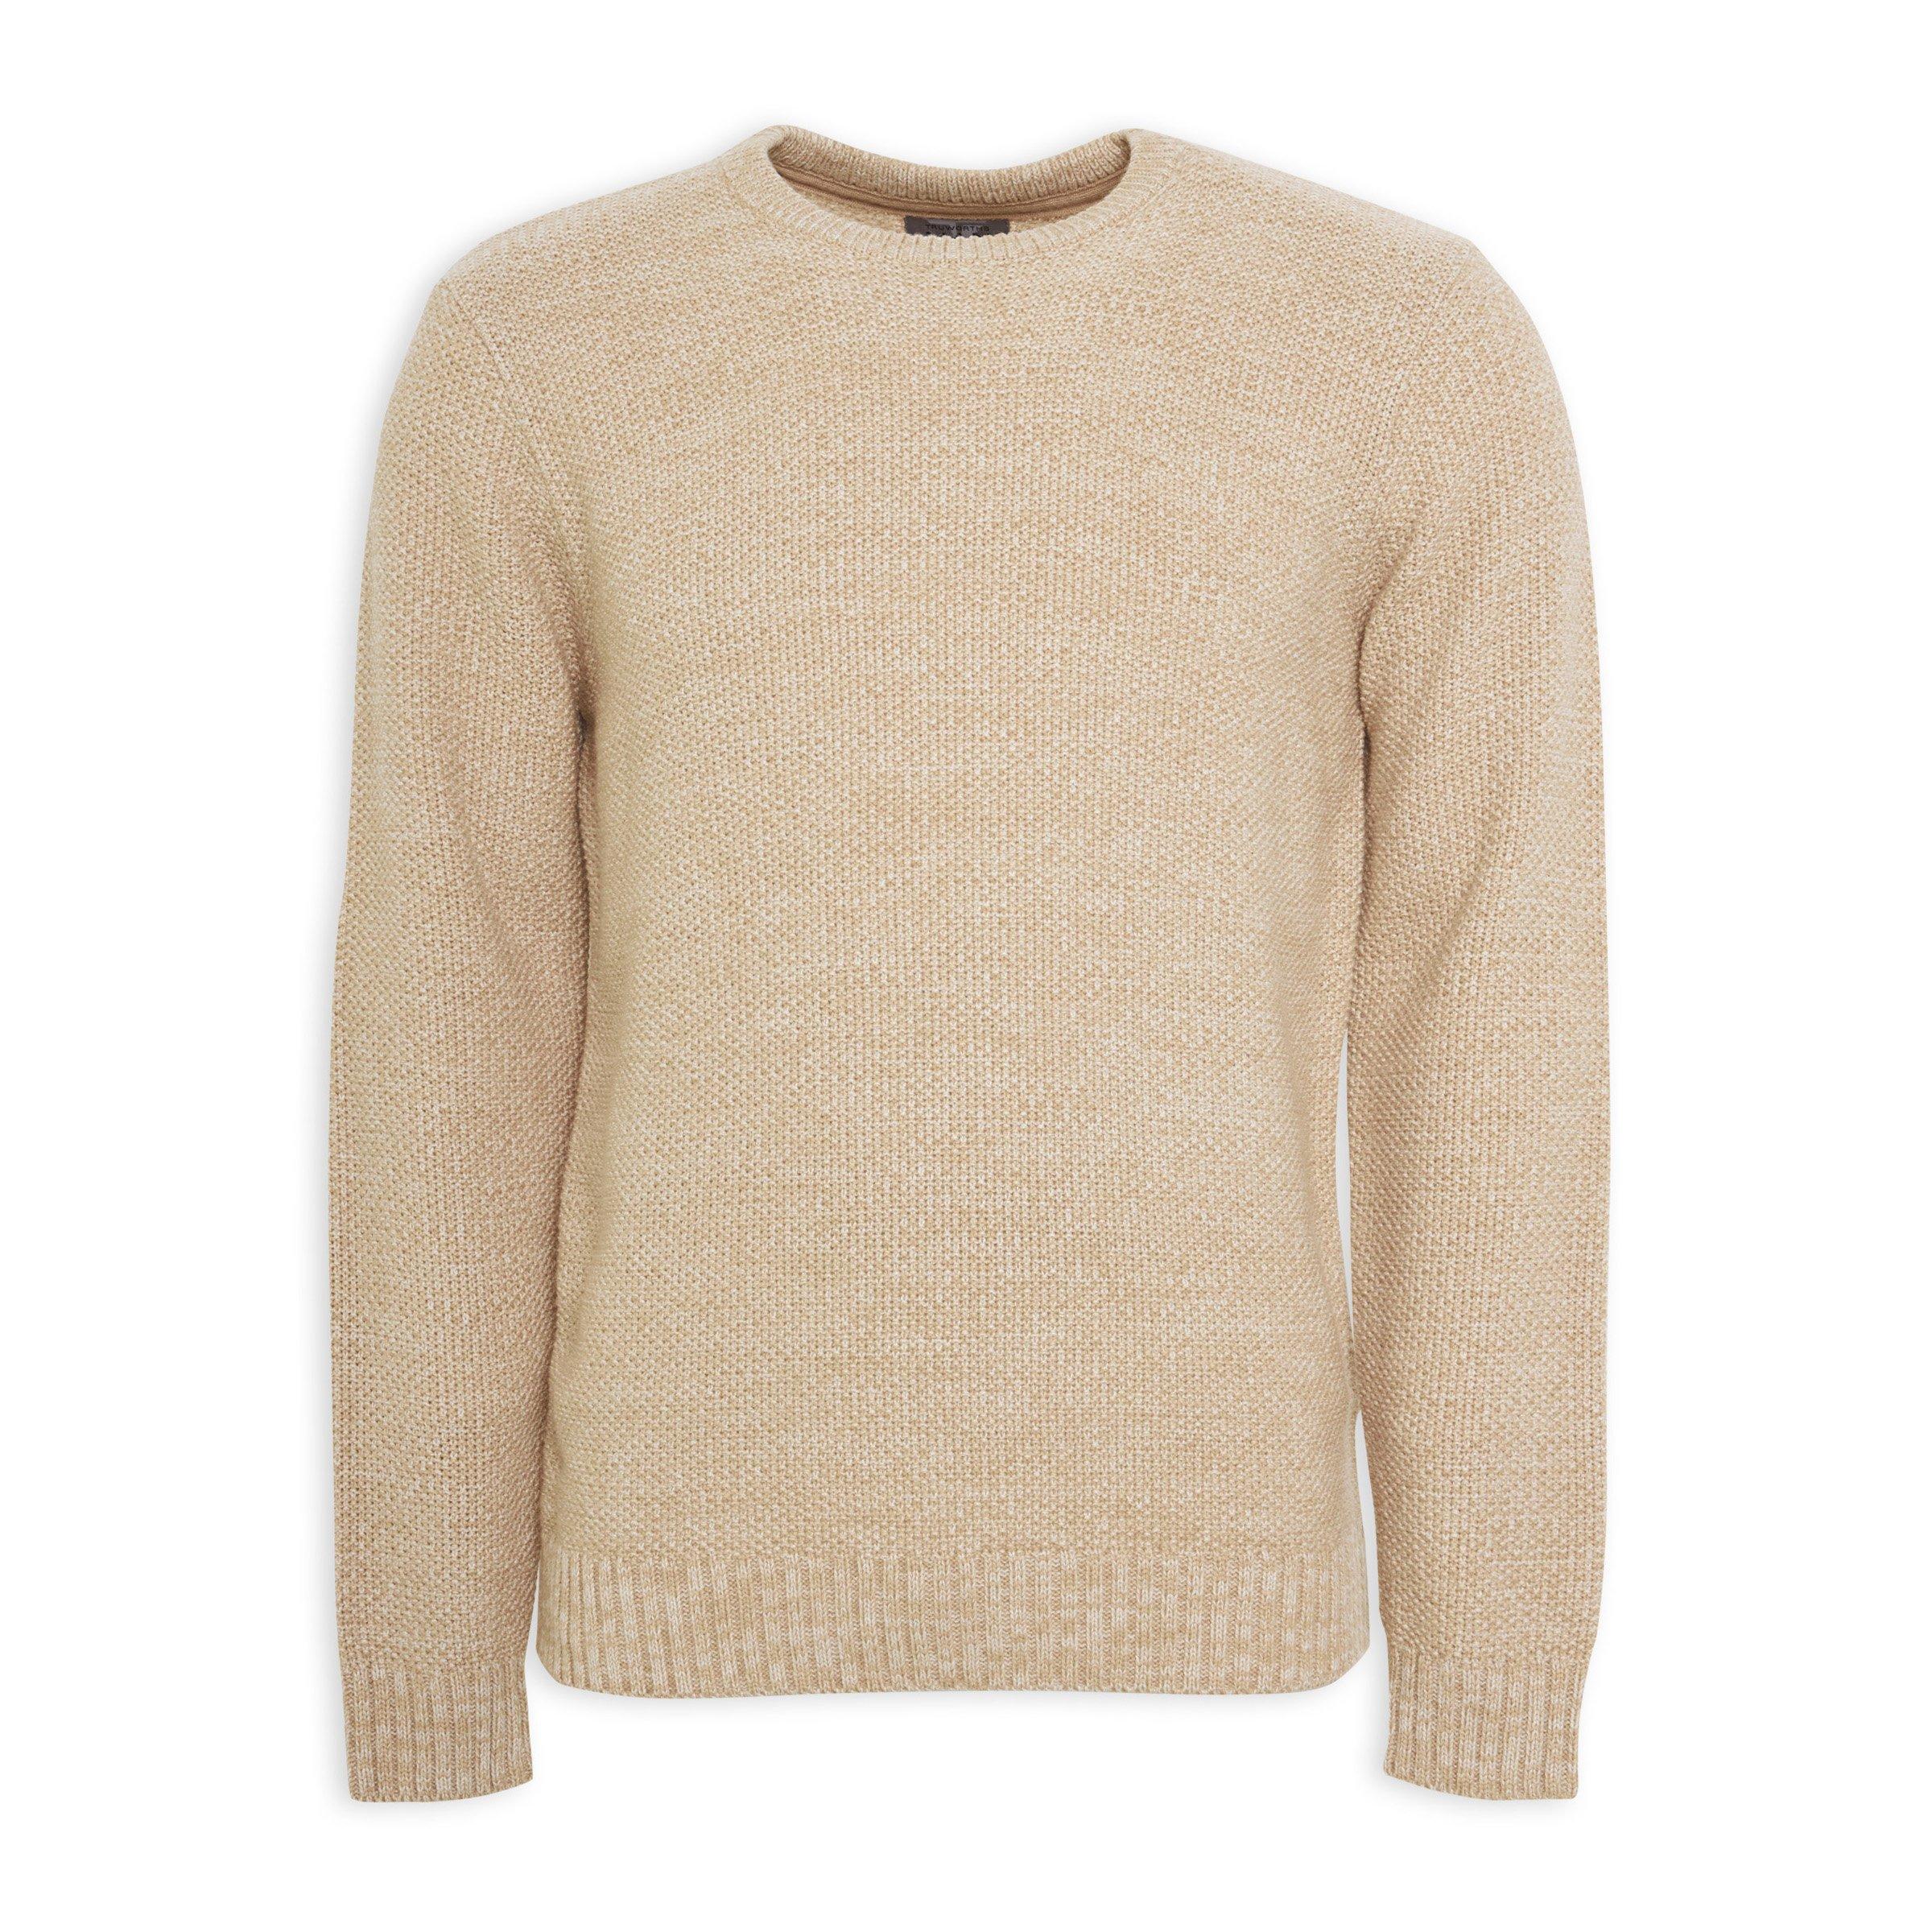 Buy Truworths Man Stone Crew Neck Sweater Online | Truworths